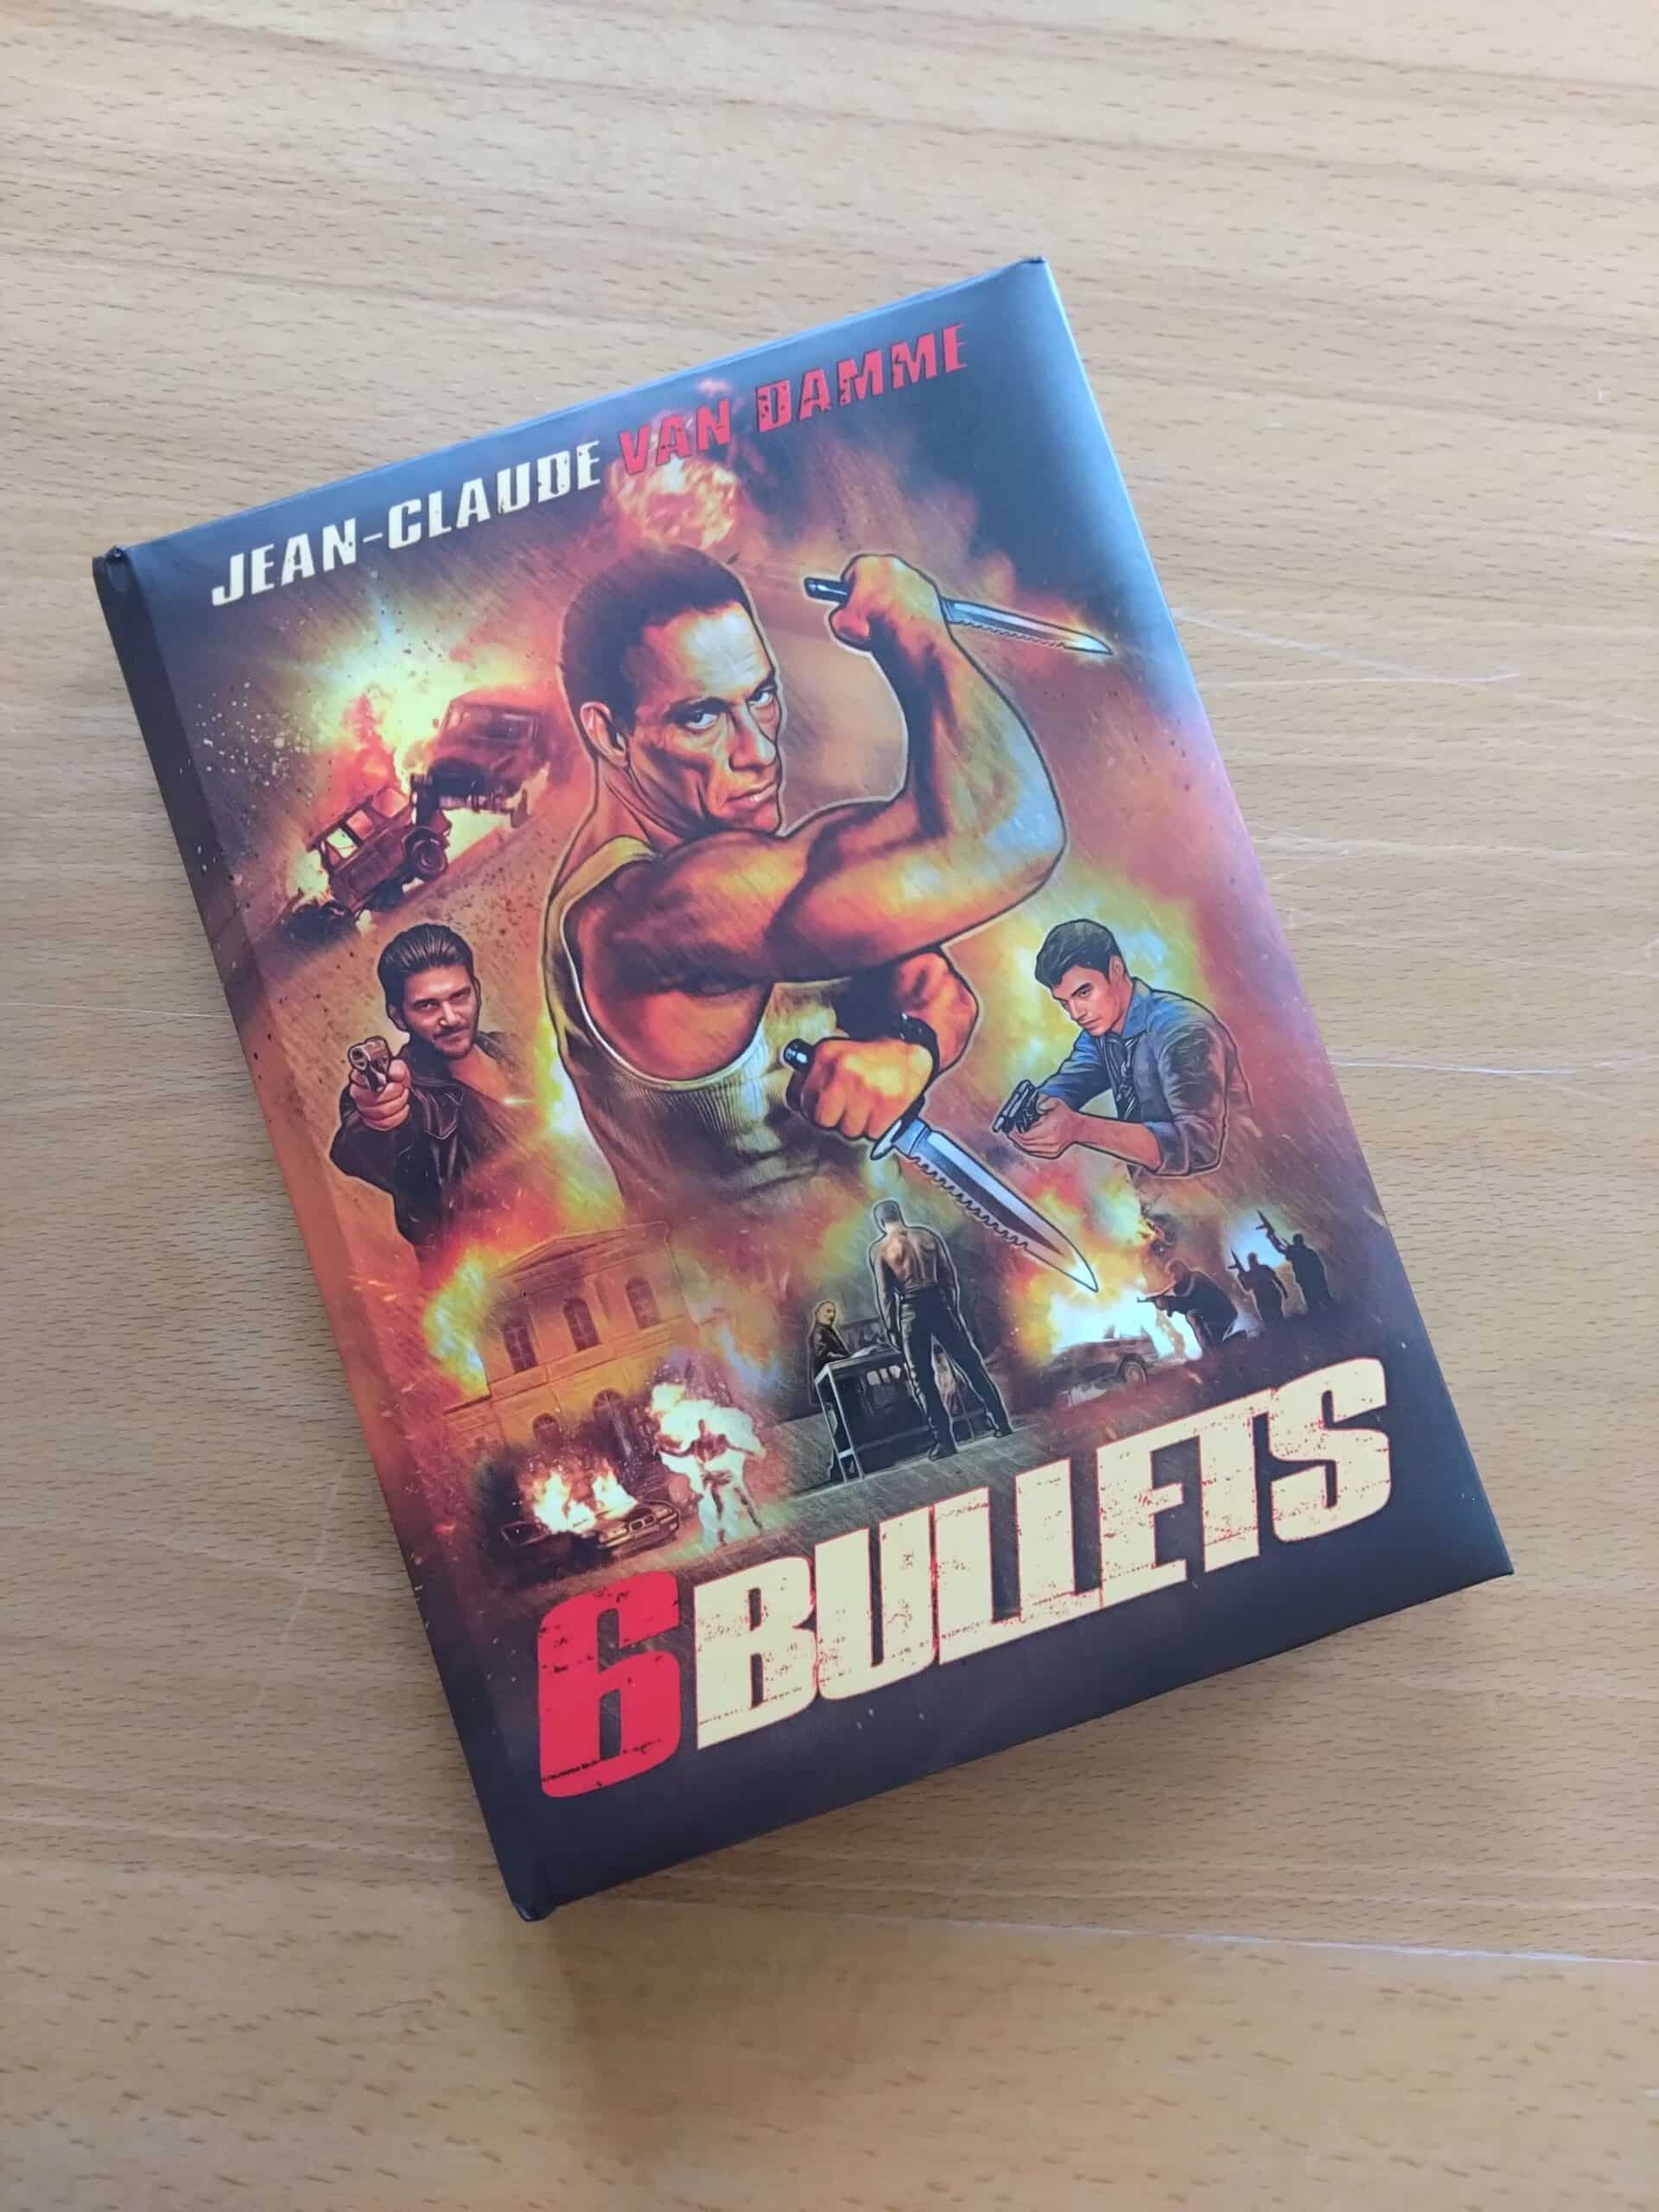 [Review] Six Bullets im wattierten Mediabook (Cover A) inklusive Blu-ray, DVD und Bonus-DVD